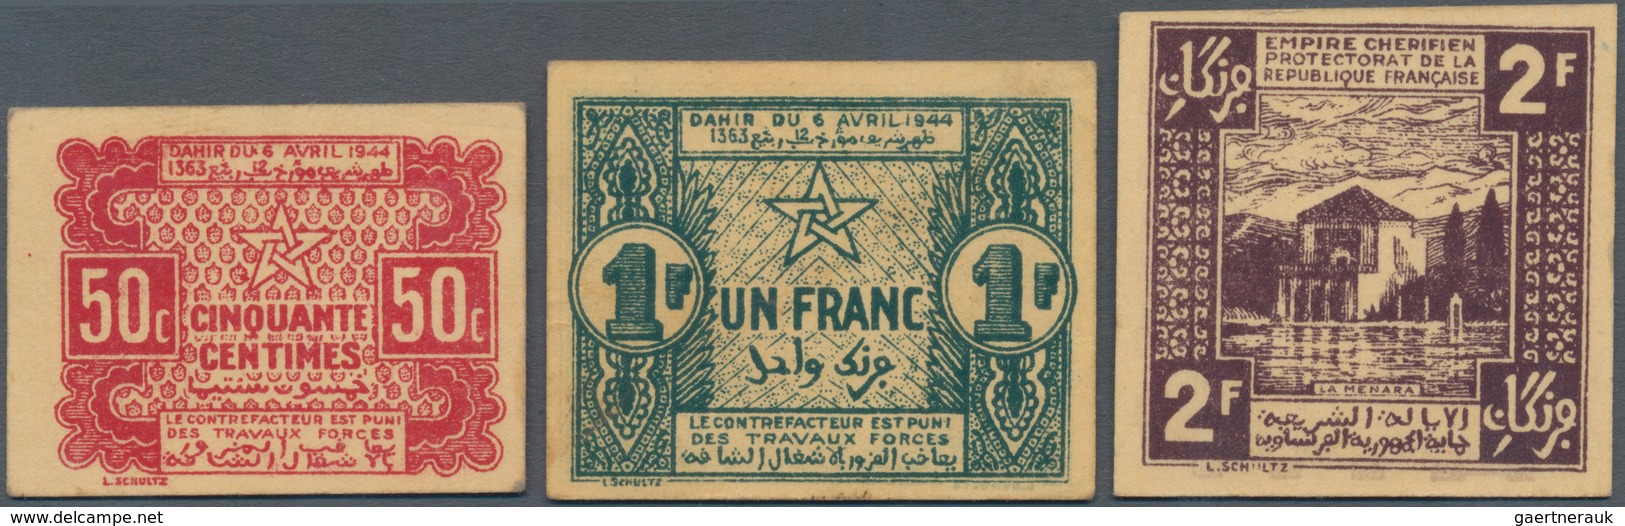 Morocco / Marokko: Empire Cherifien Set With 50 Centimes, 1 And 2 Francs 1944, P.41, 42, 43 In UNC C - Marokko